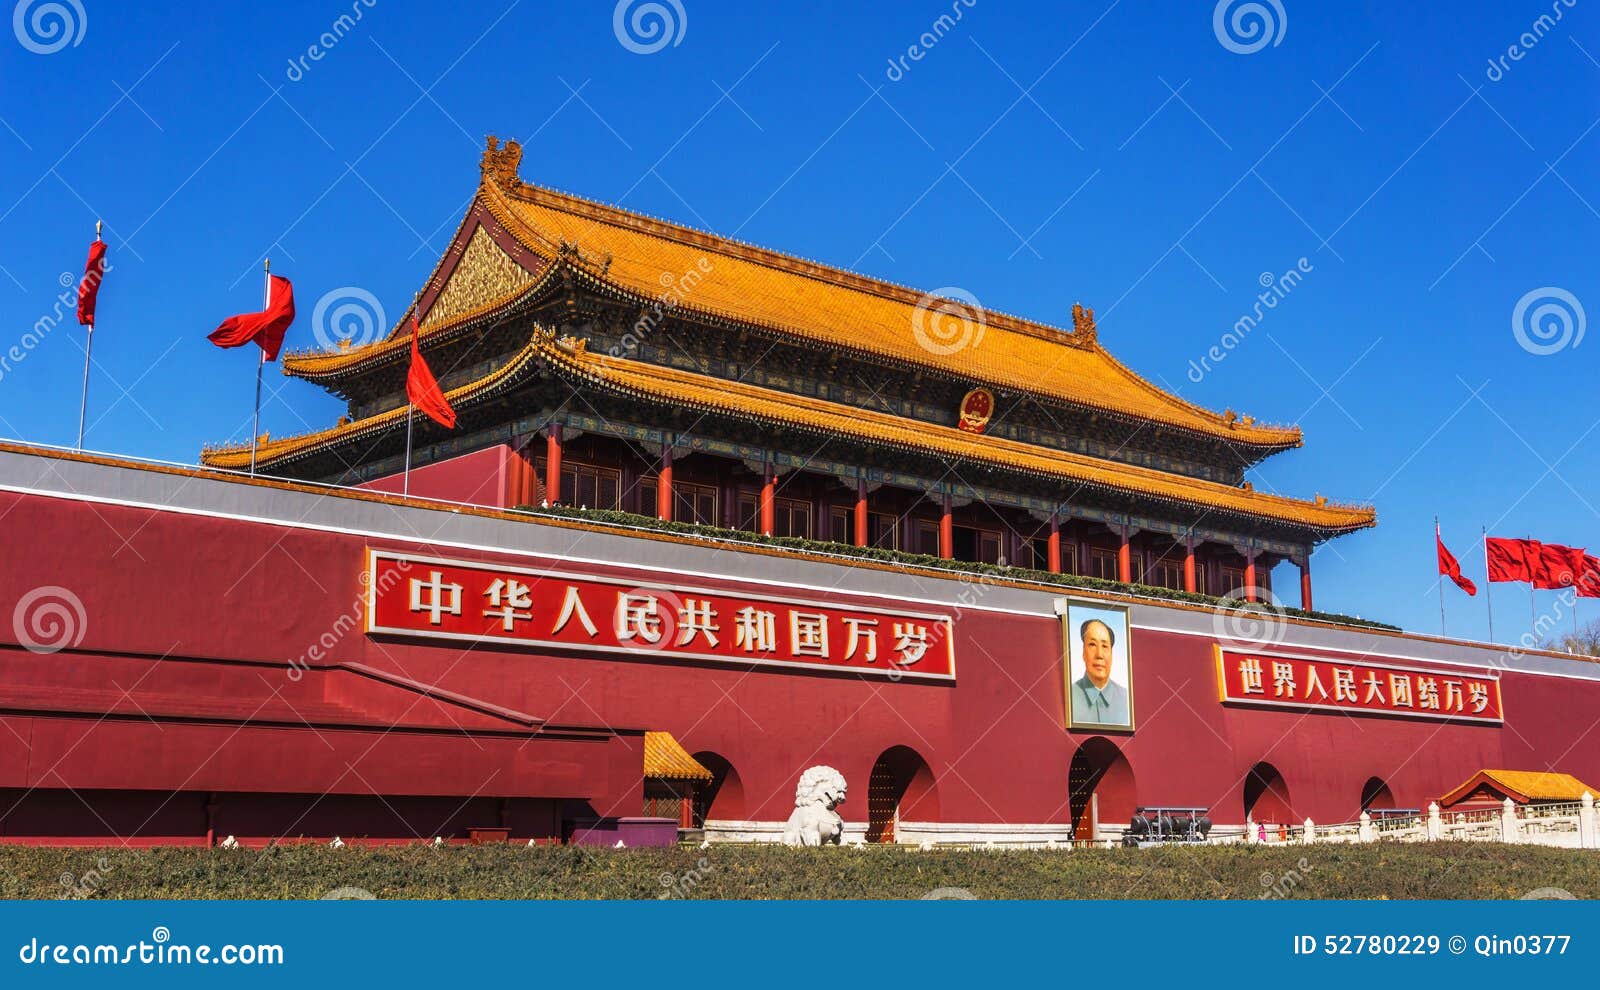 beijing tiananmen square in china